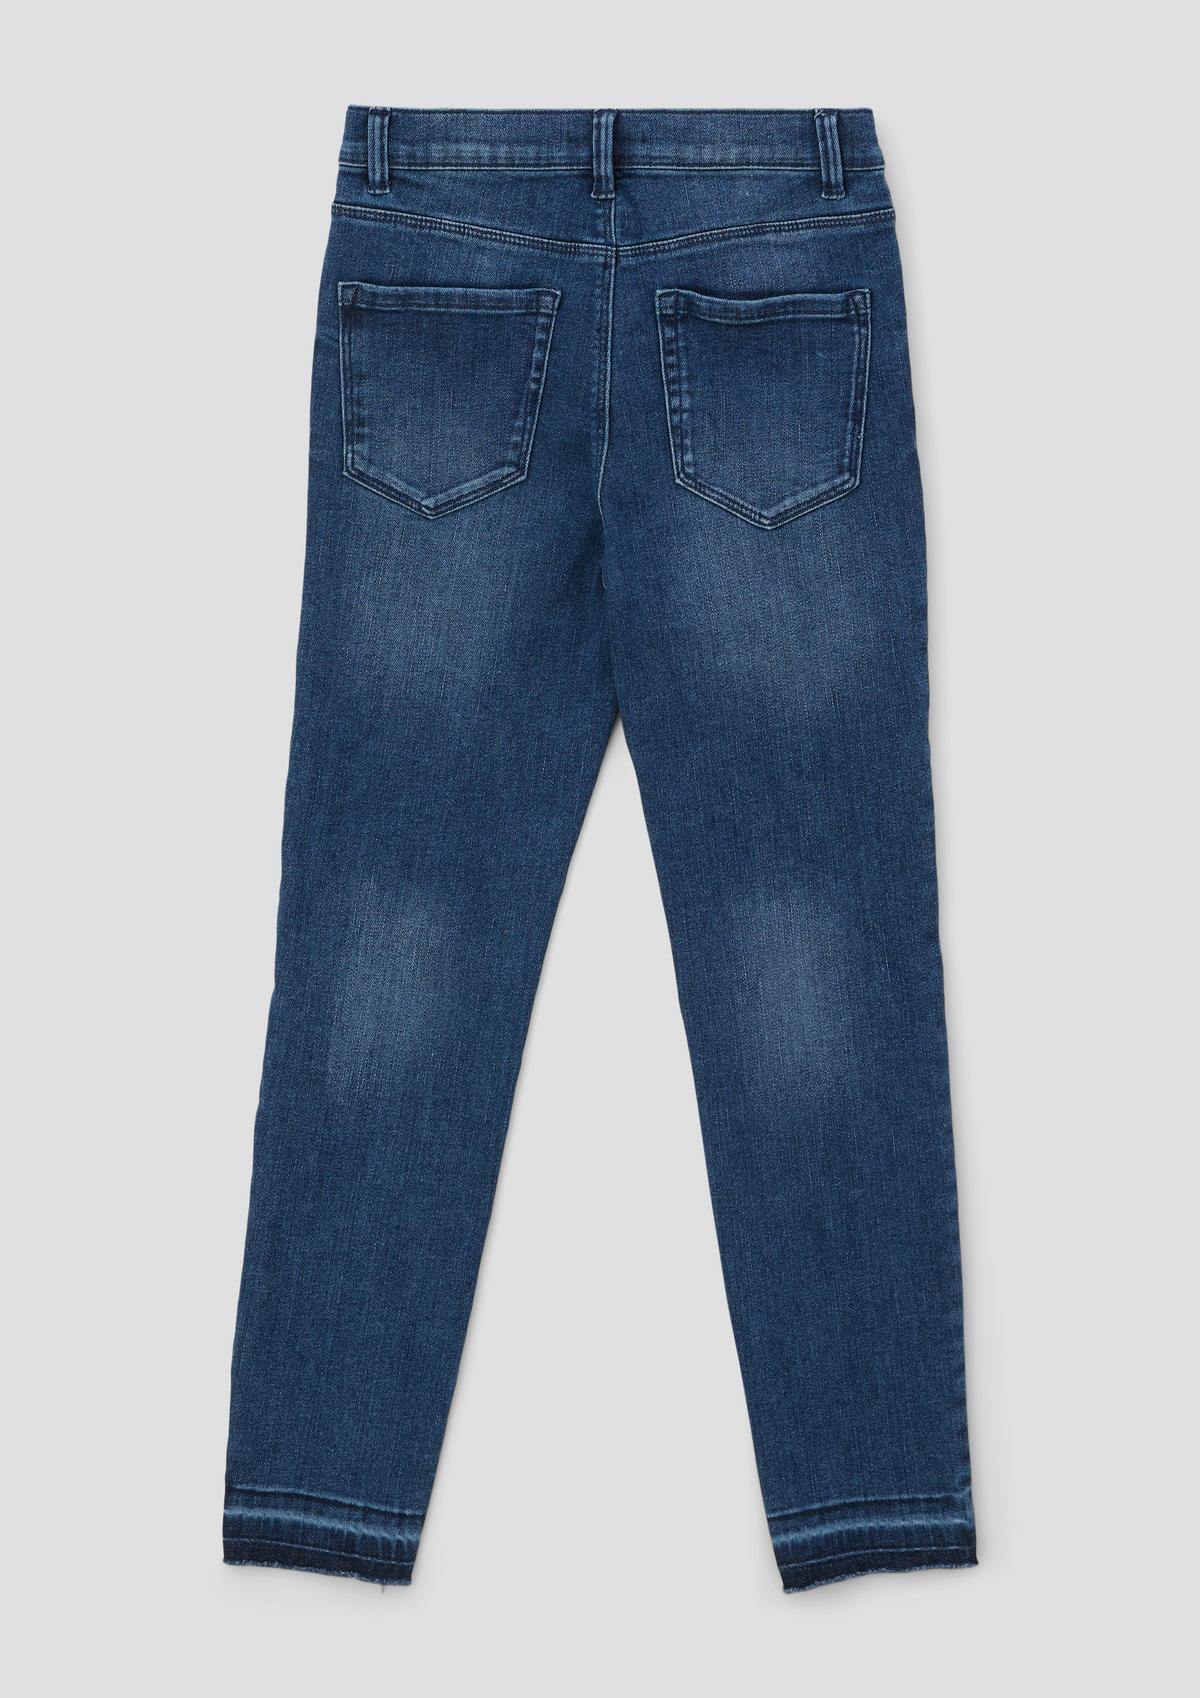 s.Oliver Ankle Jeans Suri / Regular Fit / Mid Rise / Slim Leg 